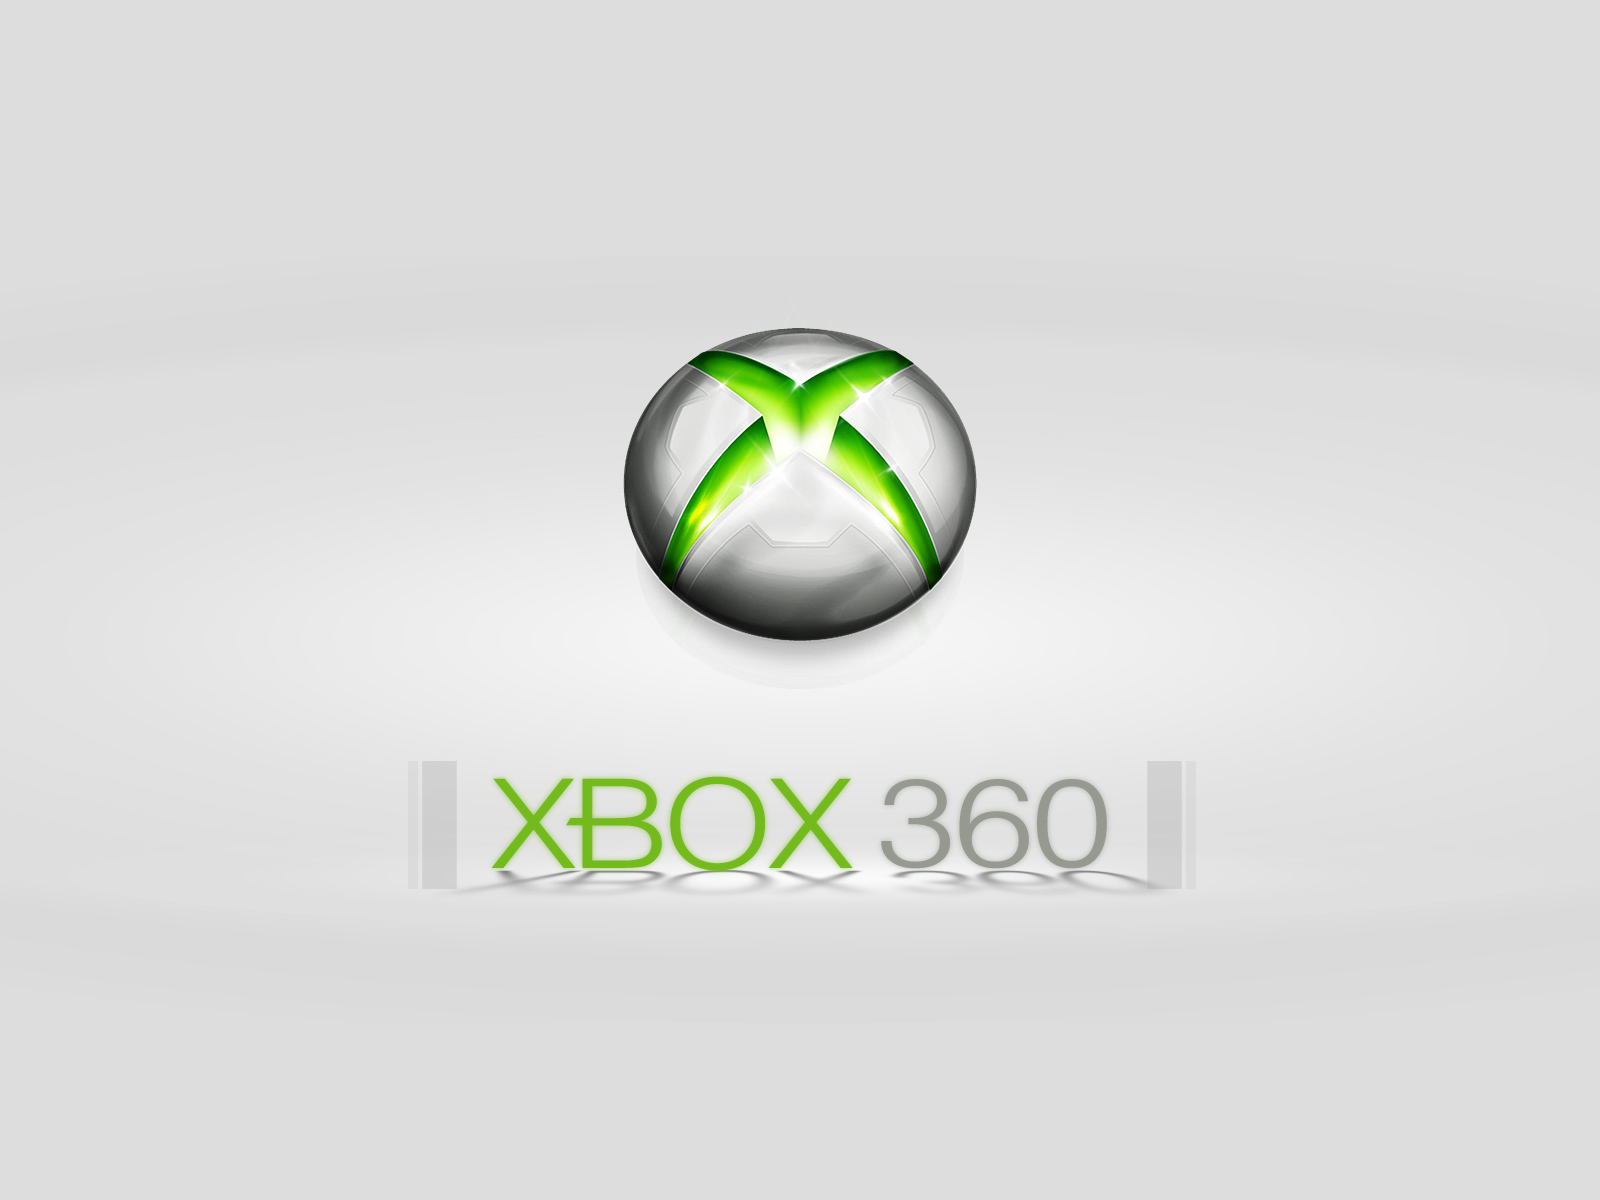 XBOX 360 Logo wallpaper by Liandrolisk on